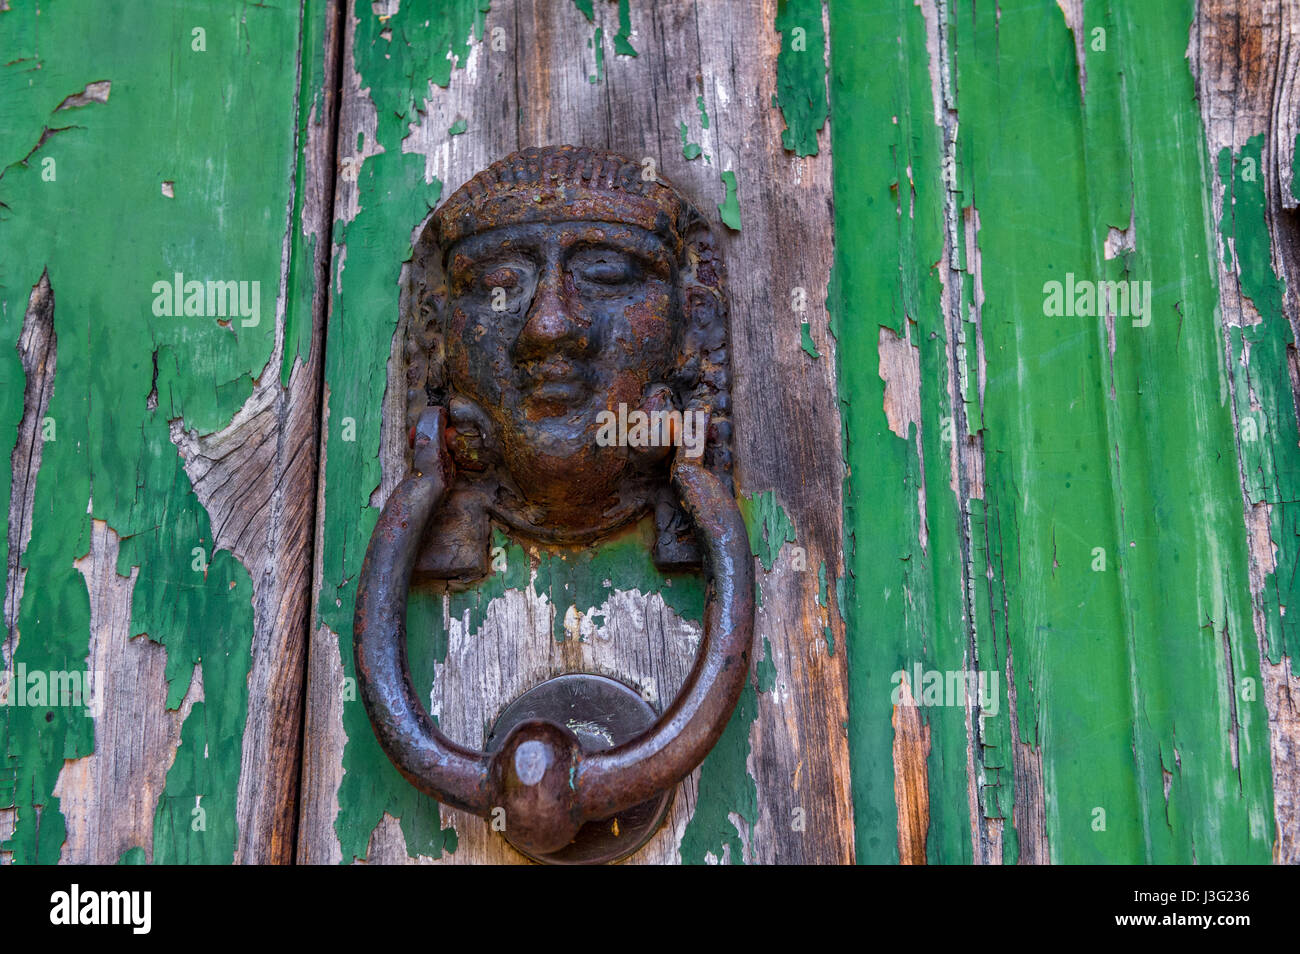 Egyptian Pharaoh door knocker on a wooden door. Stock Photo